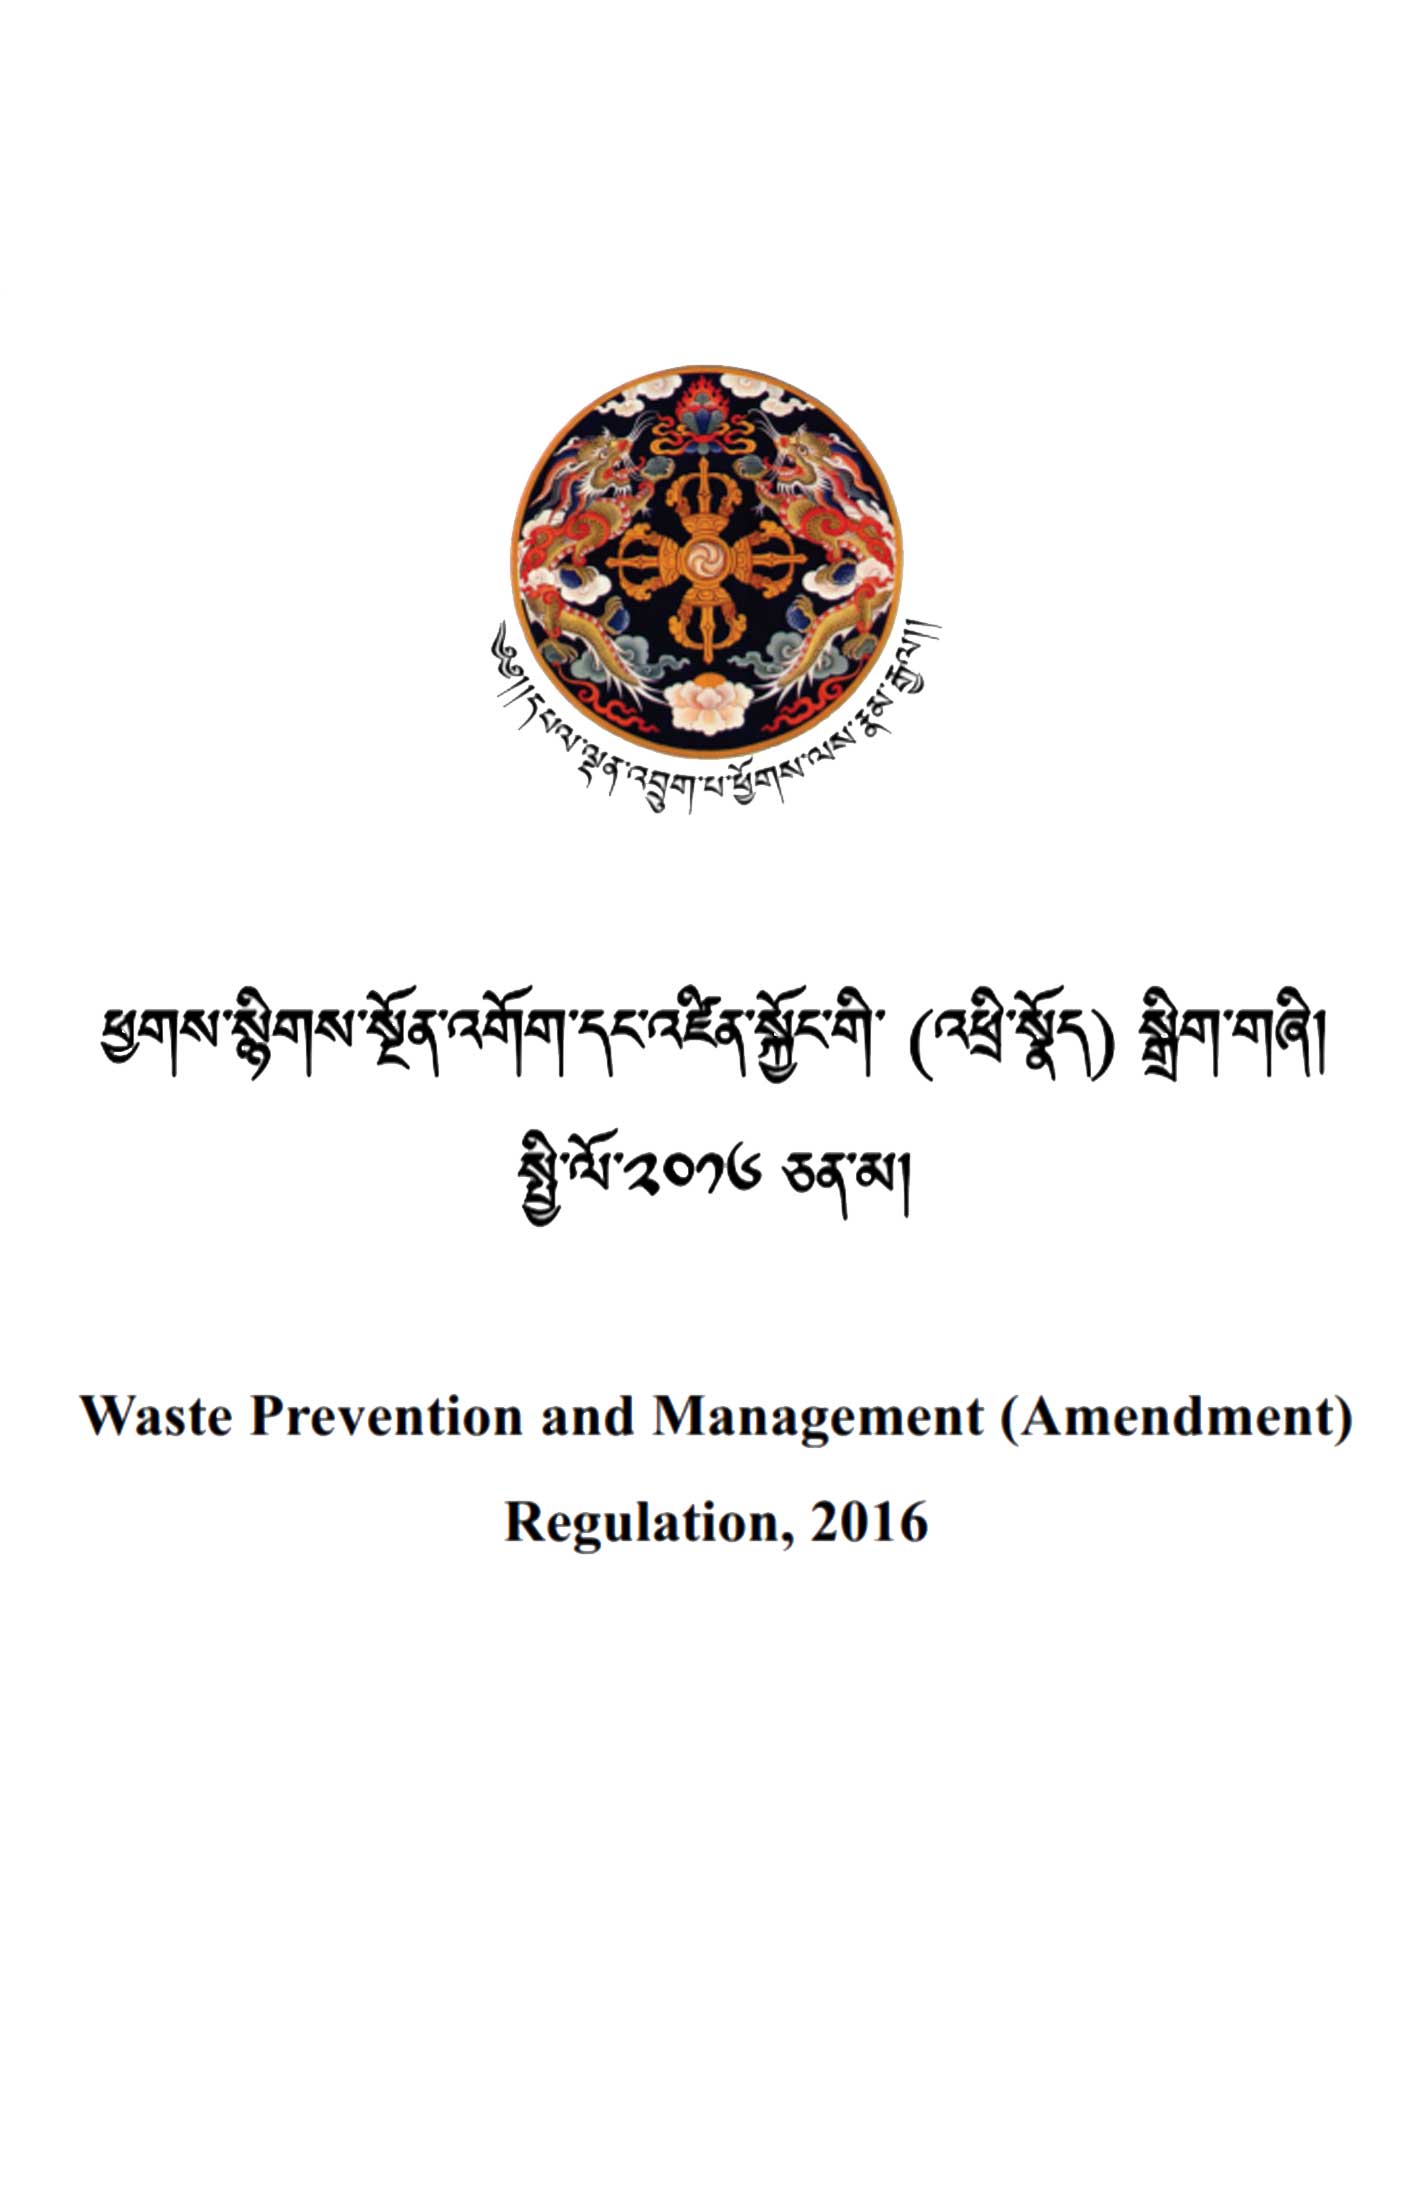 Waste Prevention and Management Regulation 2016